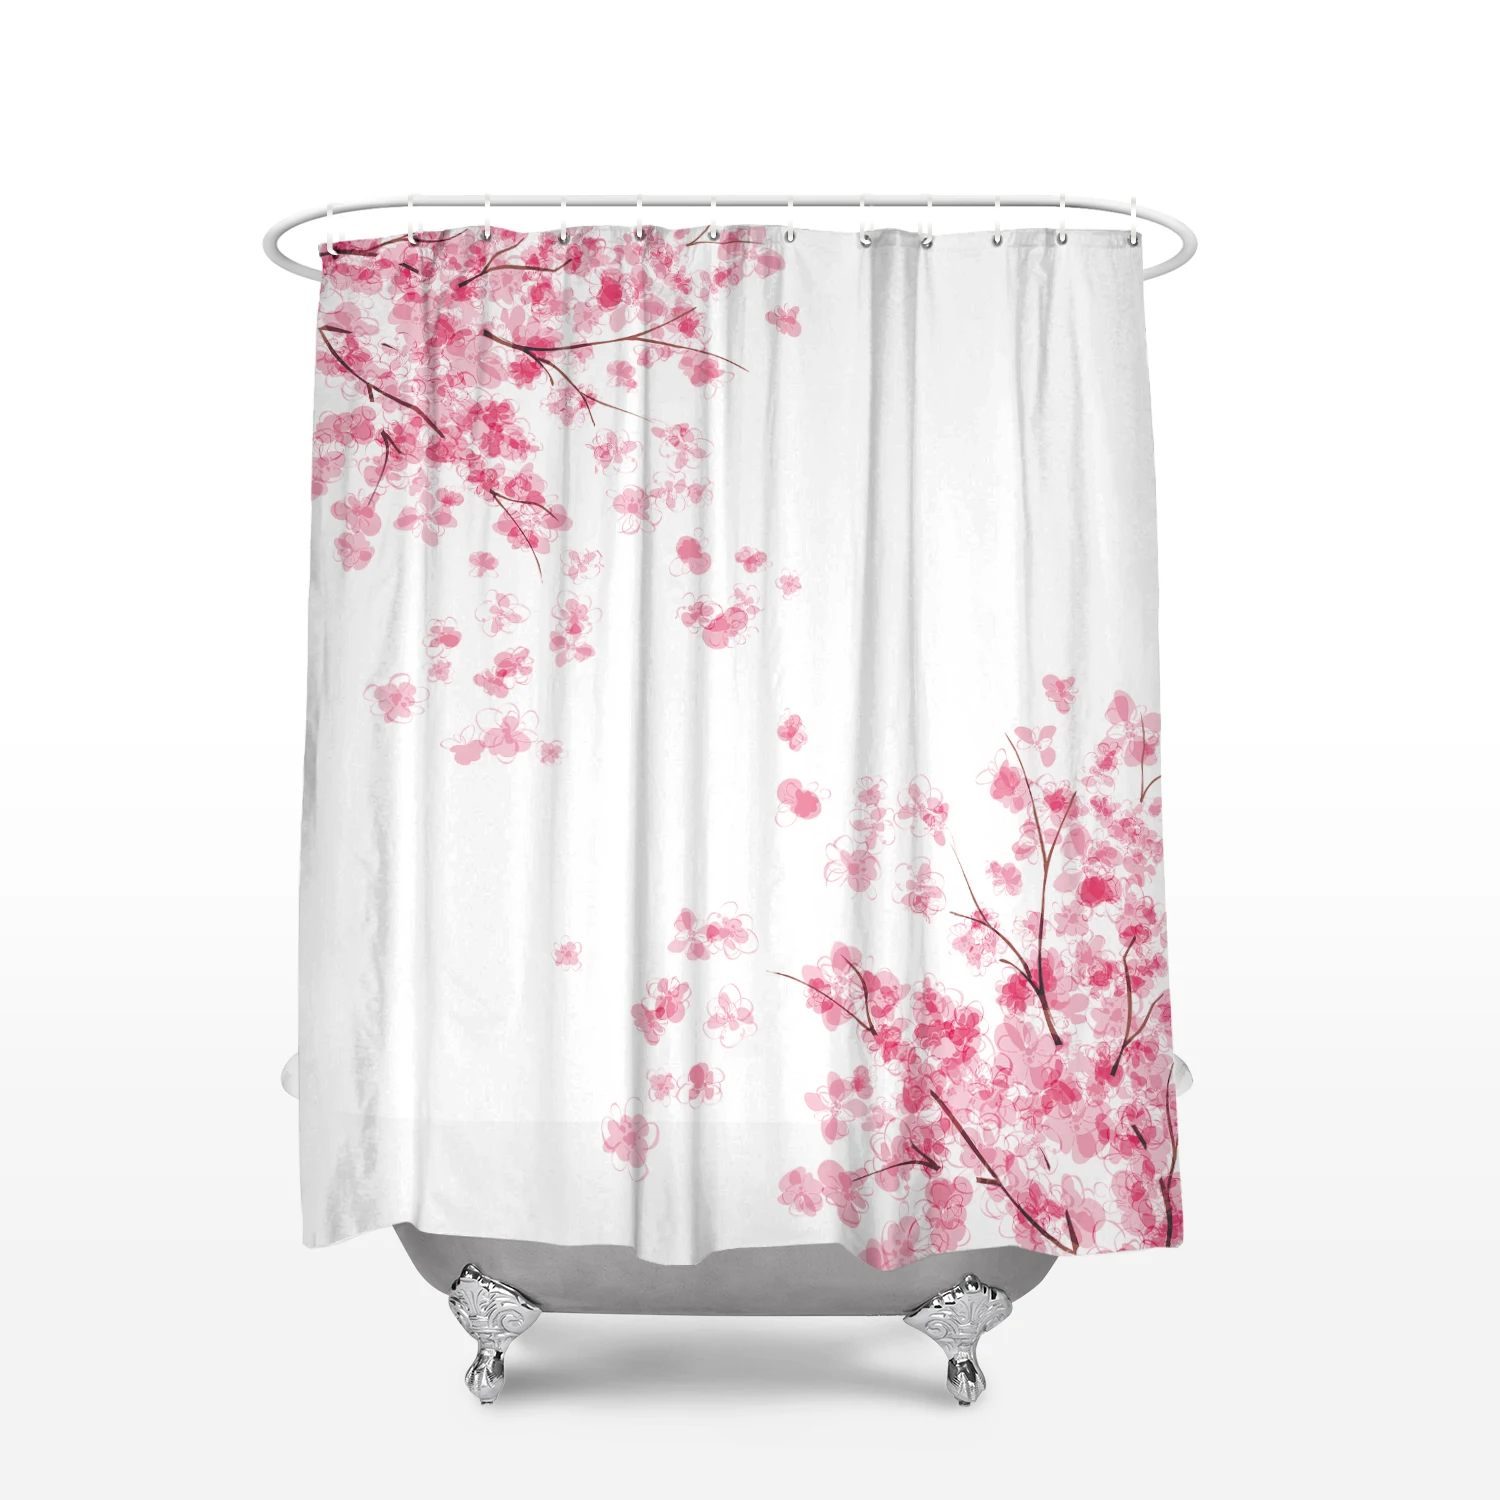 Floral Sakura Waterproof Bathroom Home Decor Shower Curtain Set With 12 Hooks